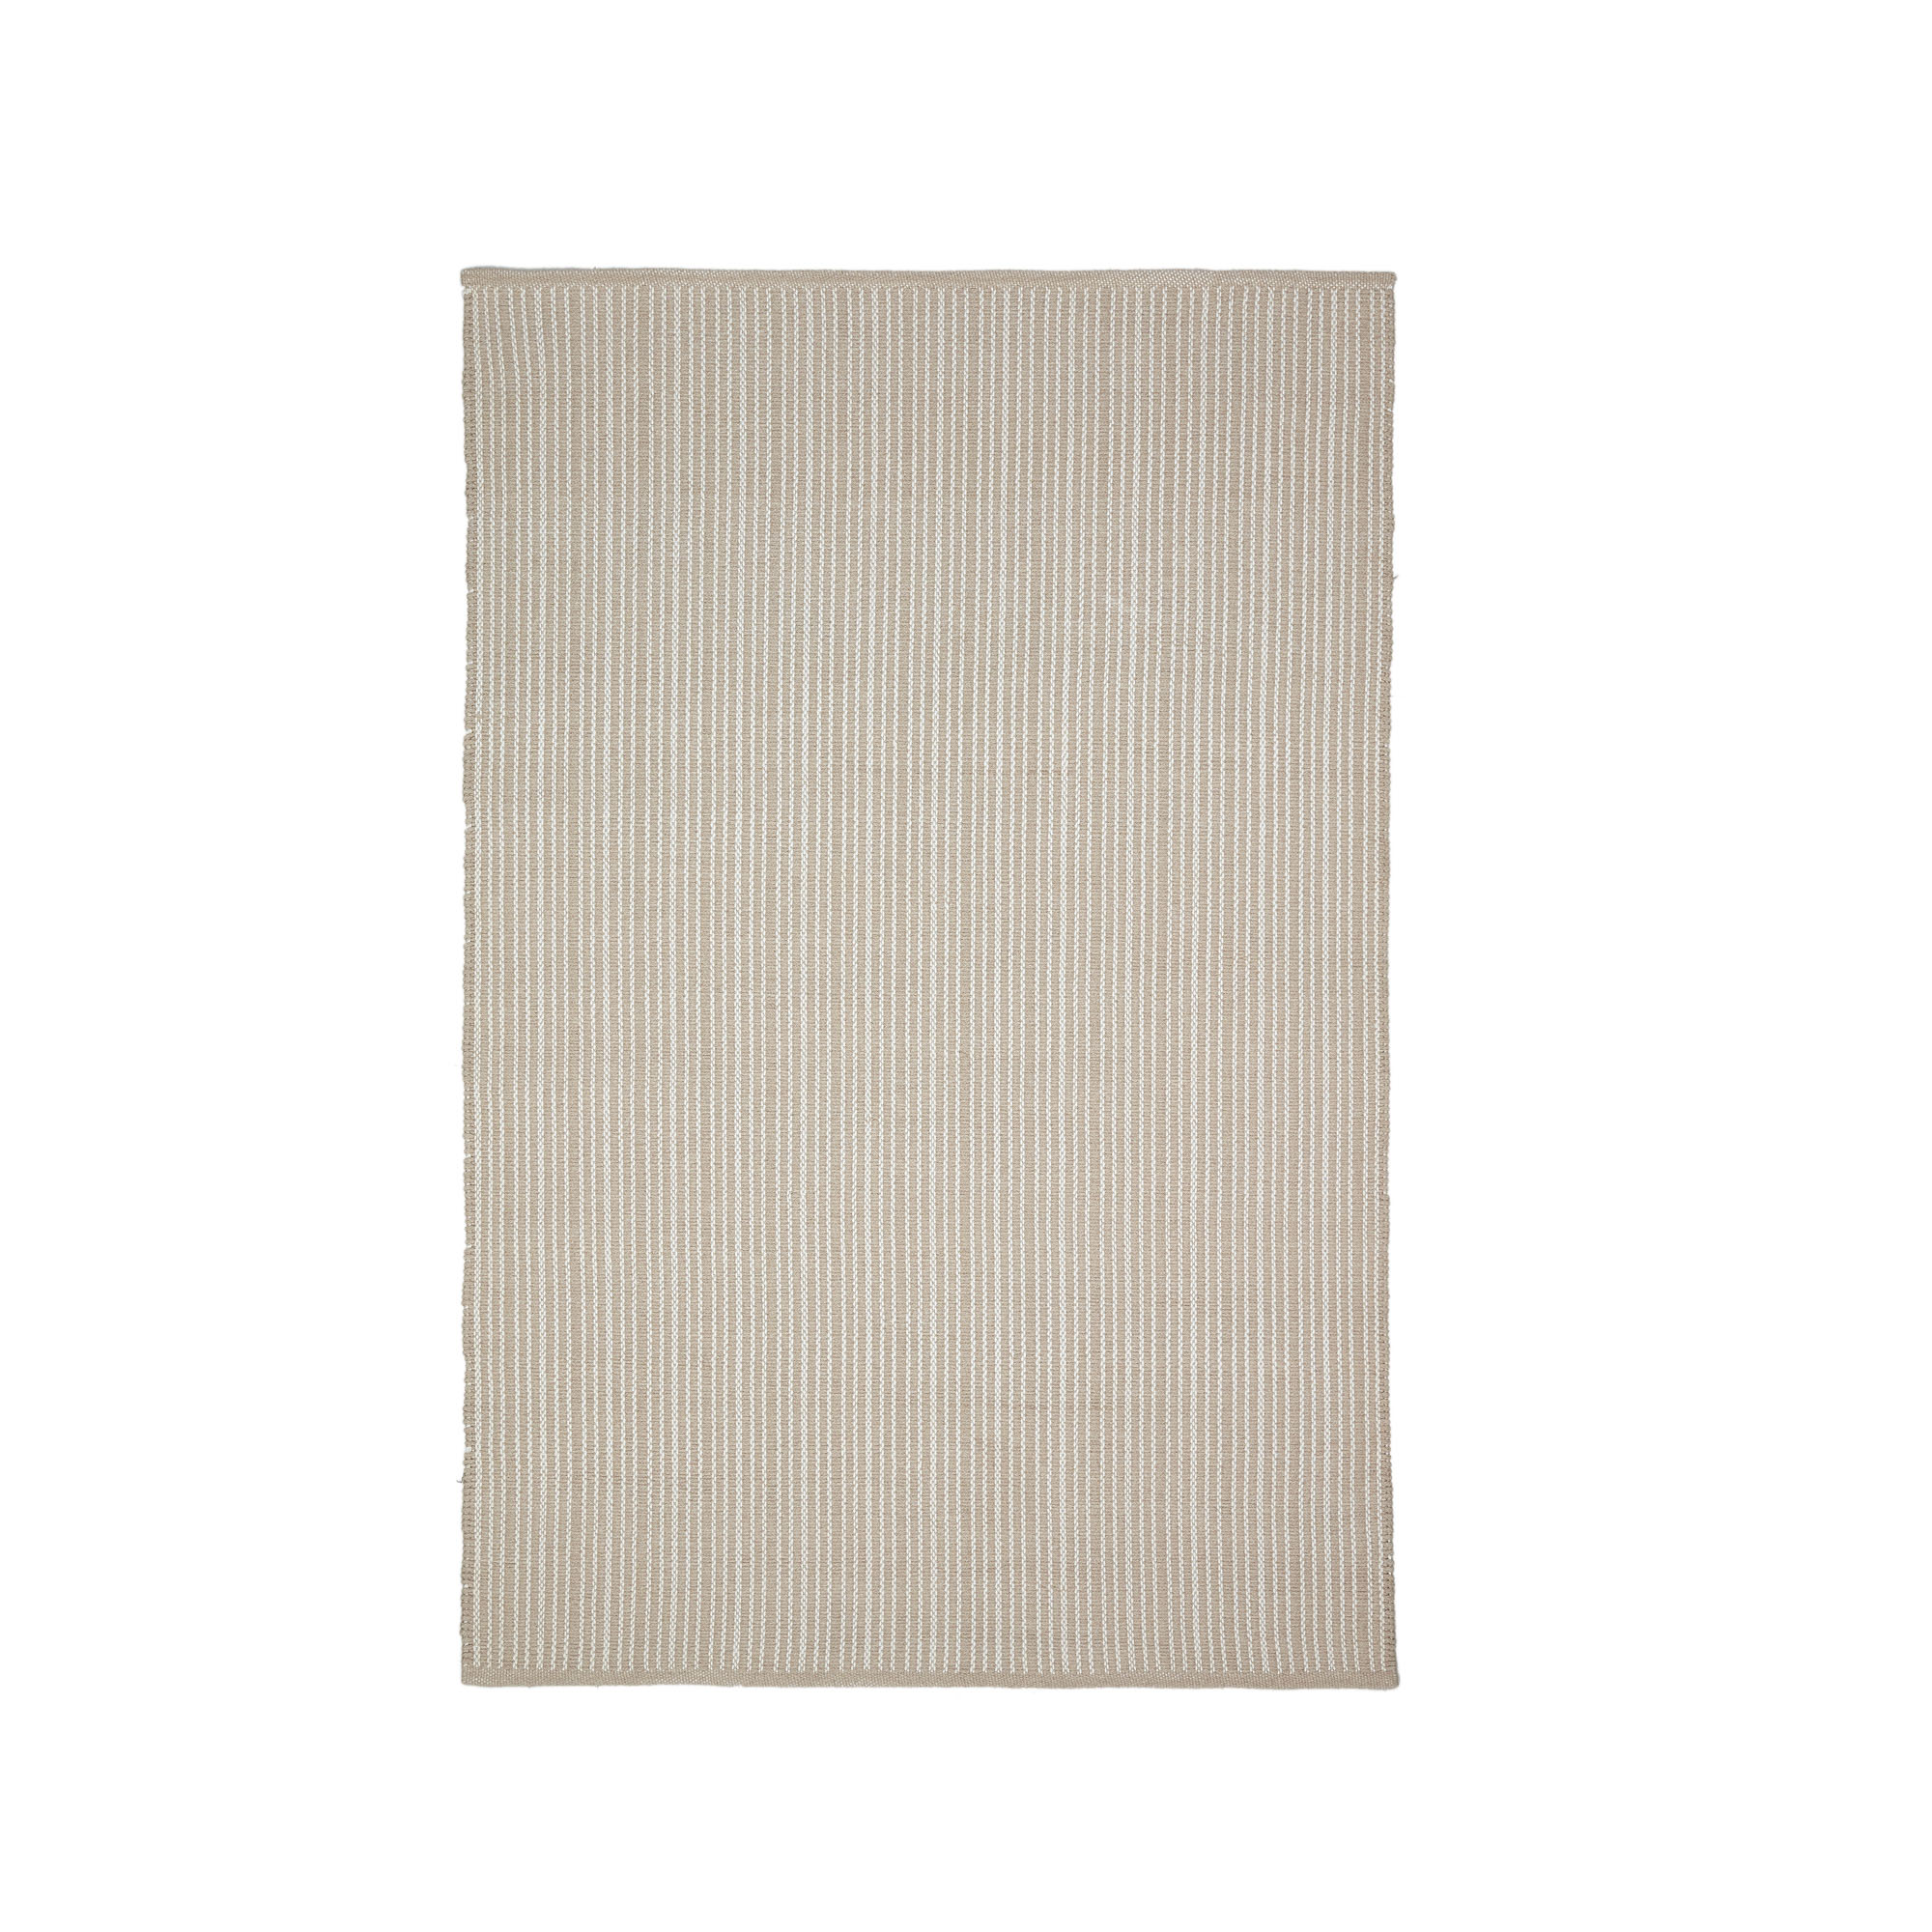 LAFORMA Canyet gulvtæppe, rektangulær - beige syntetiske fibre (160x230)